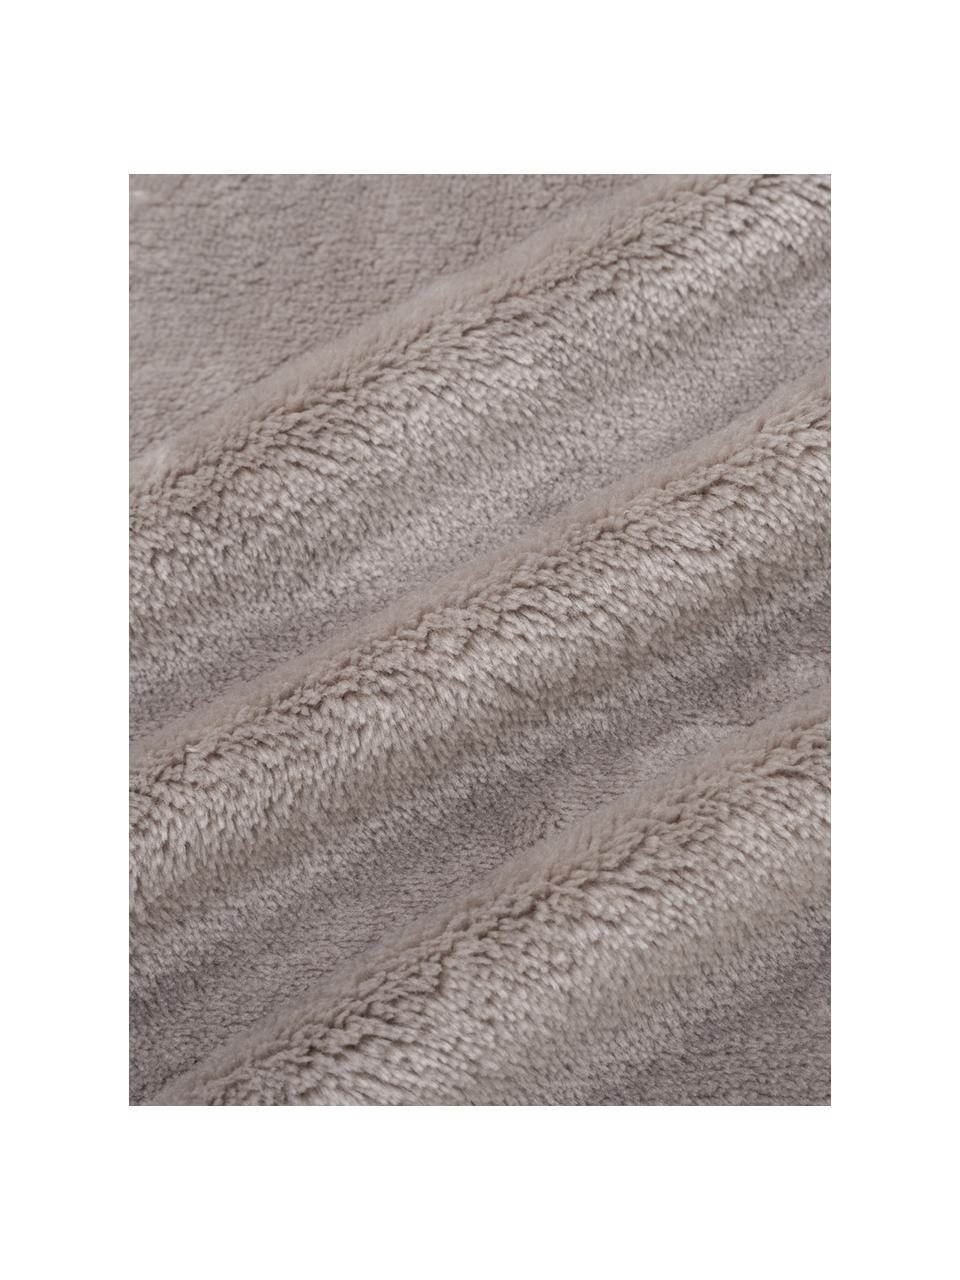 Plaid doux en polaire taupe Bomla, Polyester, Taupe, larg. 130 x long. 170 cm